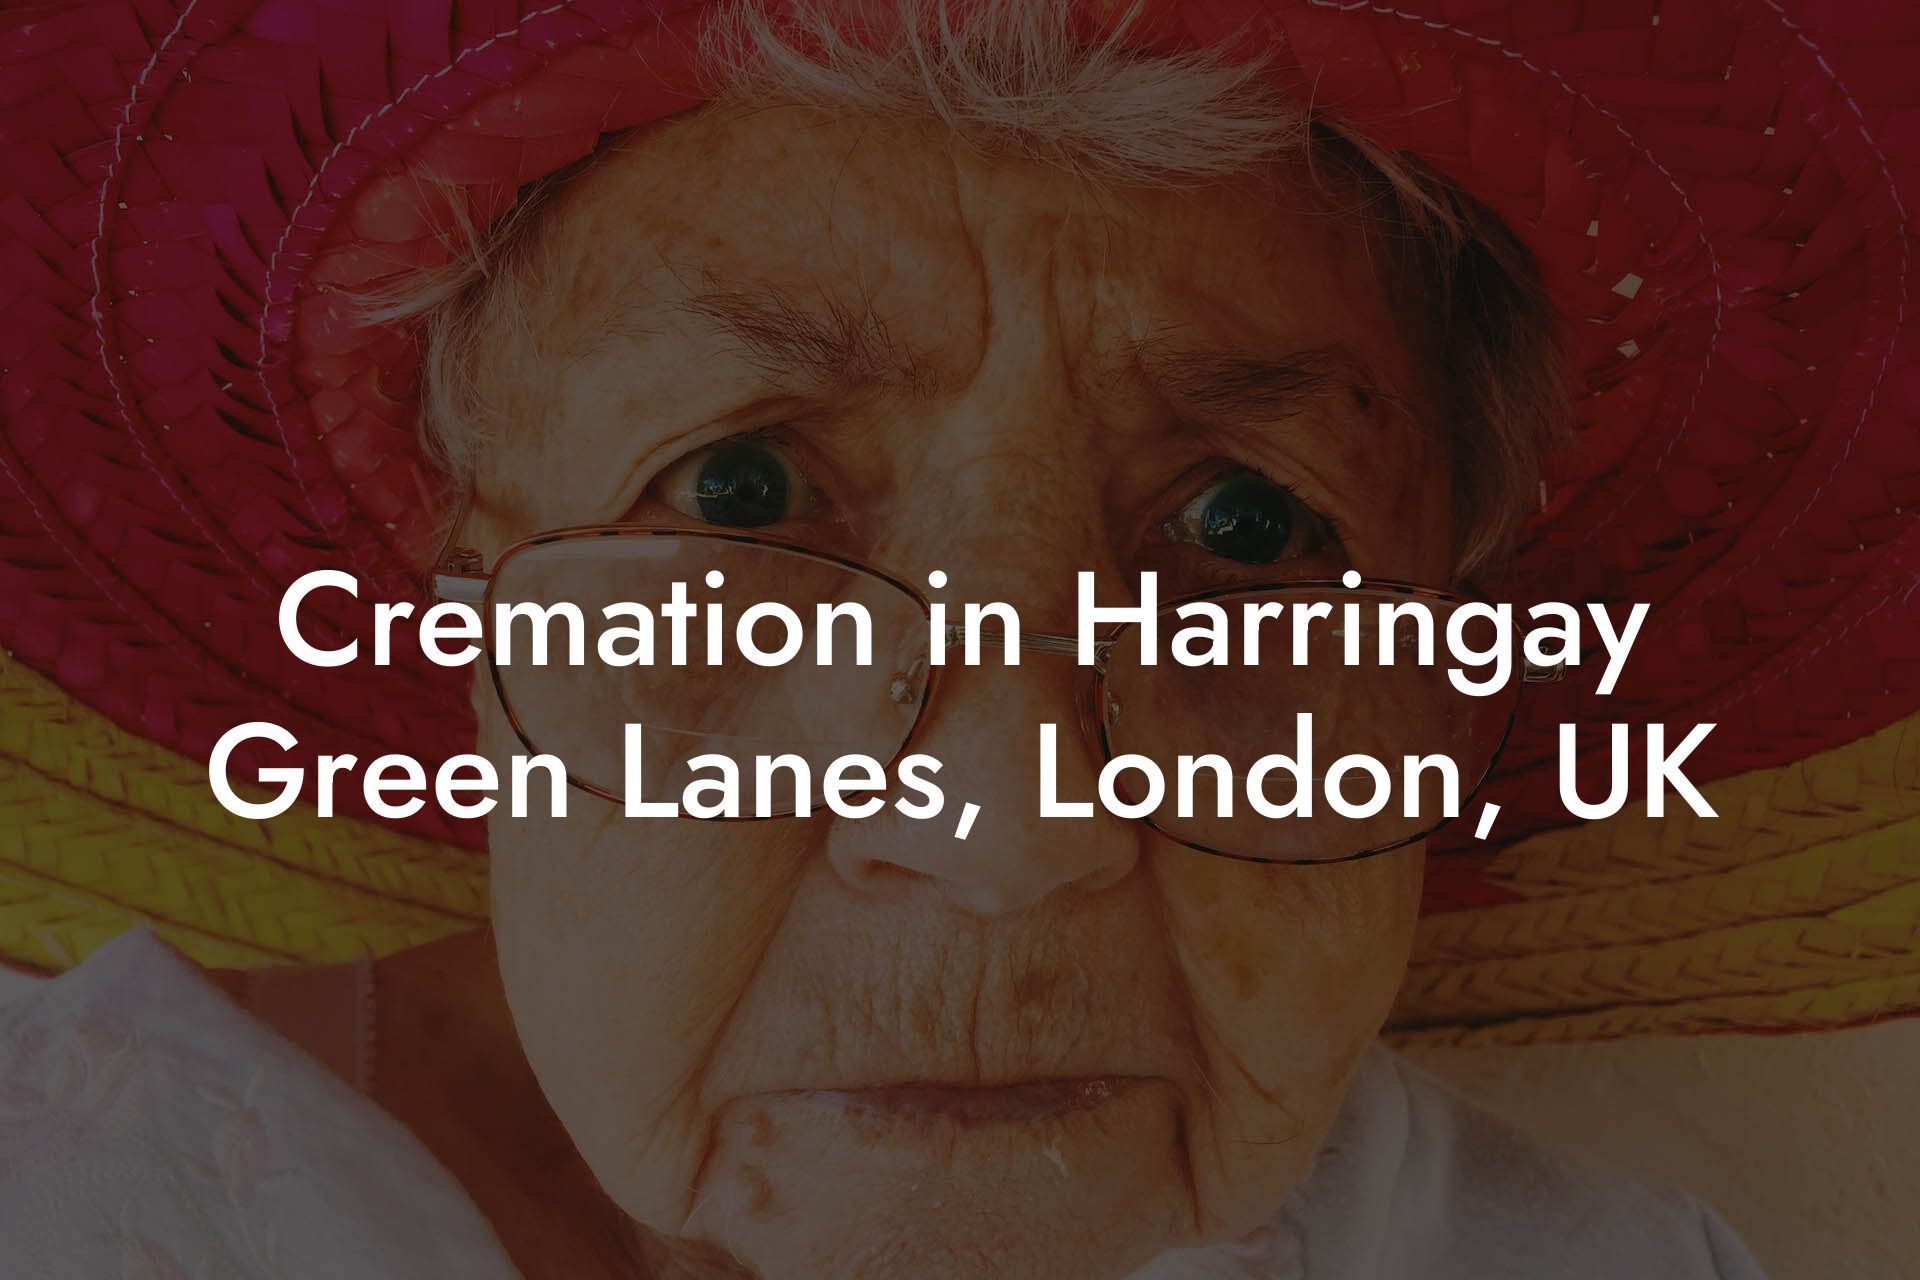 Cremation in Harringay Green Lanes, London, UK